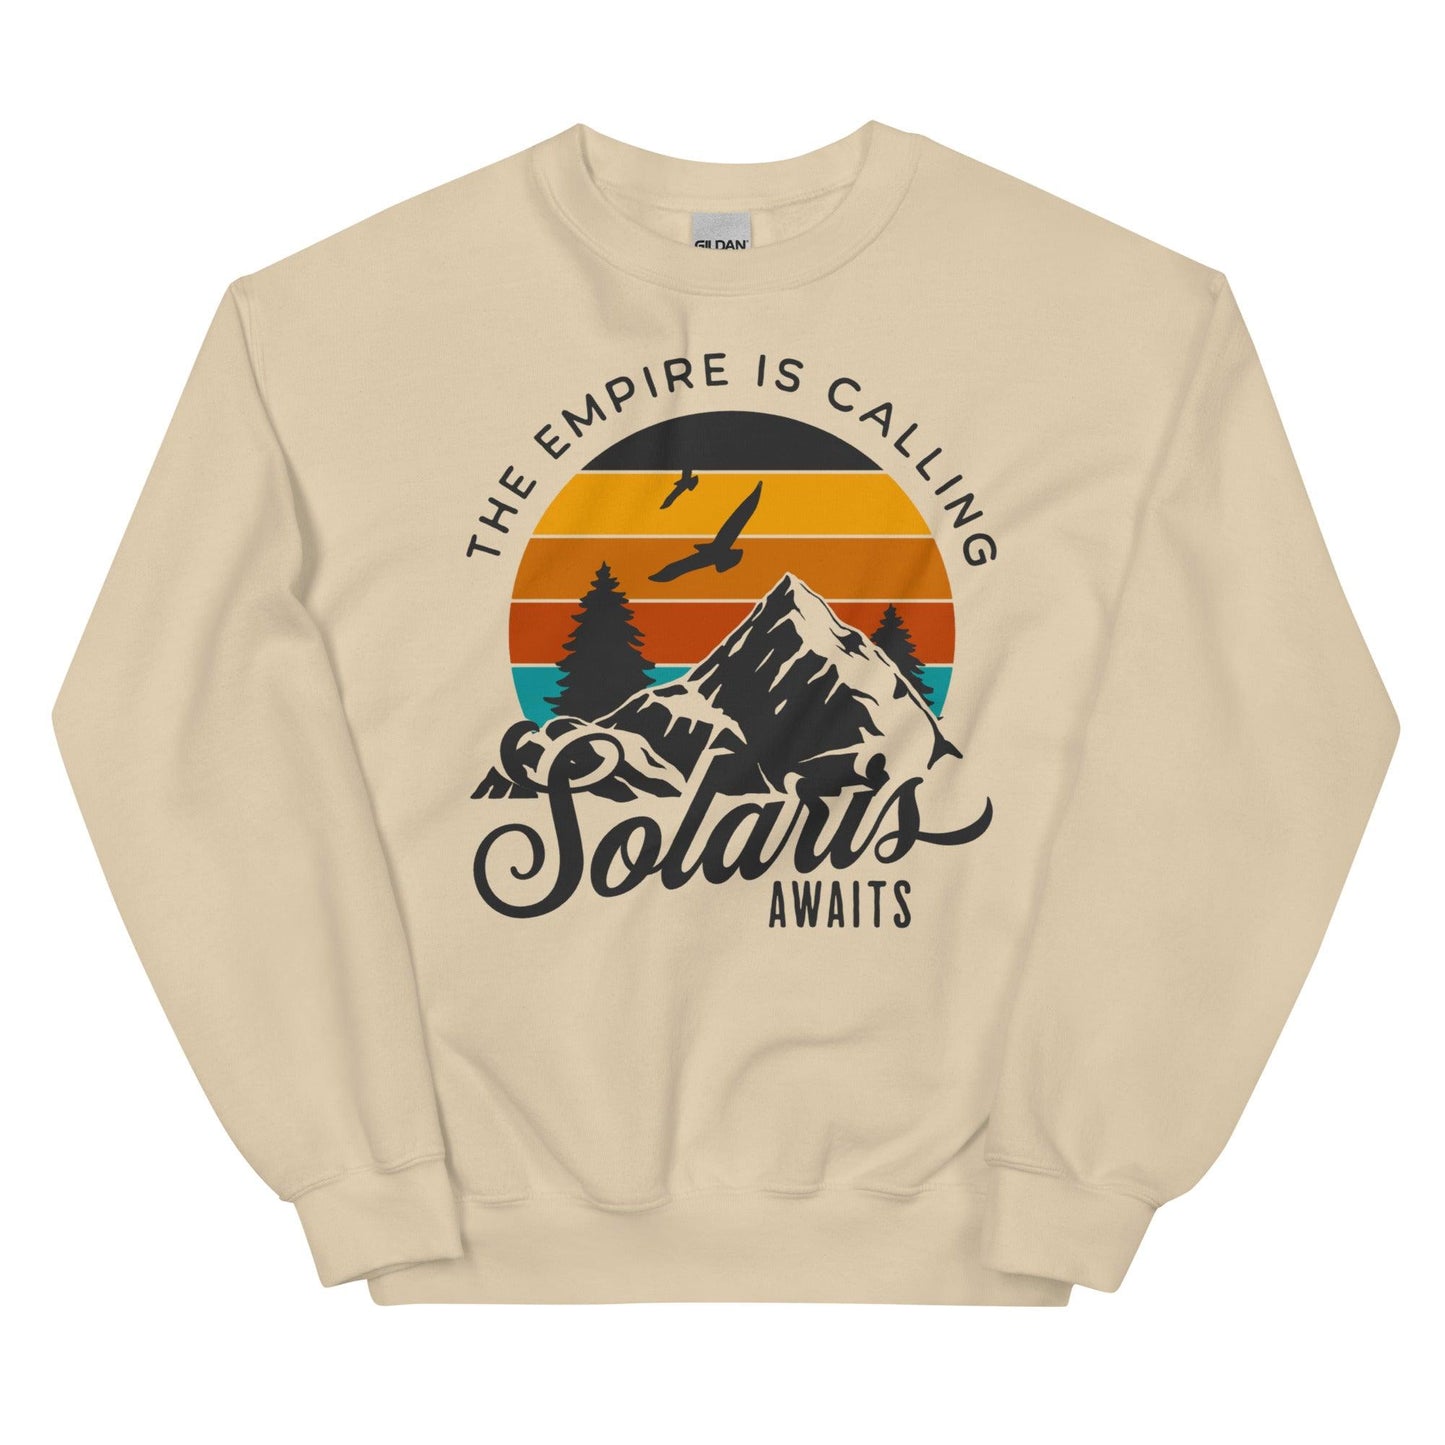 Solaris Awaits Sweatshirt - The Bean Workshop - air awakens, elise kova, sweatshirt